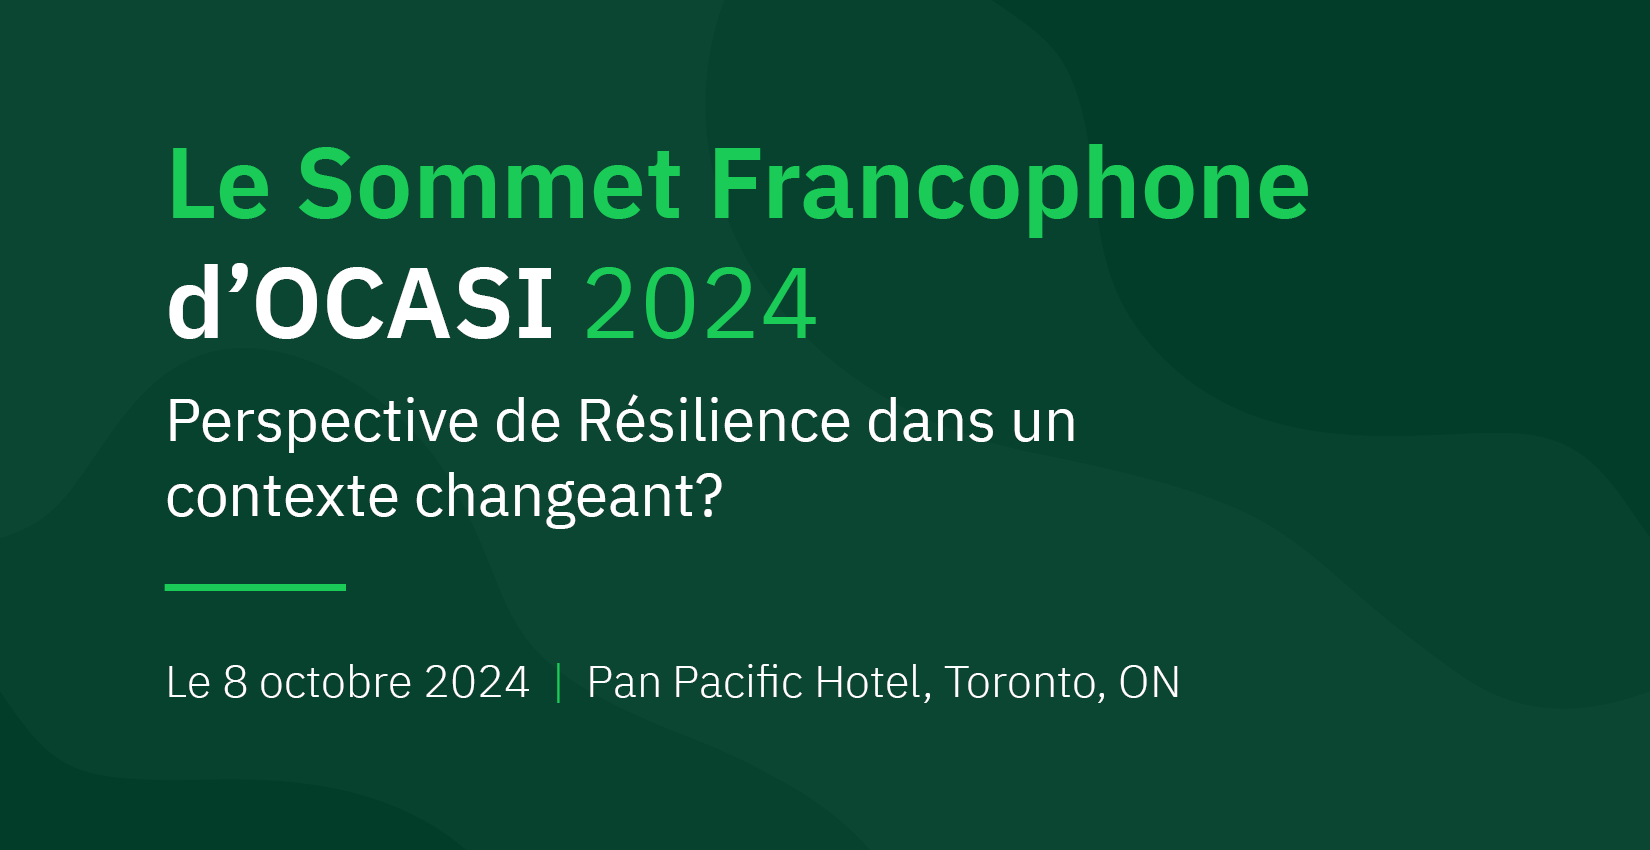 Le Sommet Francophone d’OCASI 2024